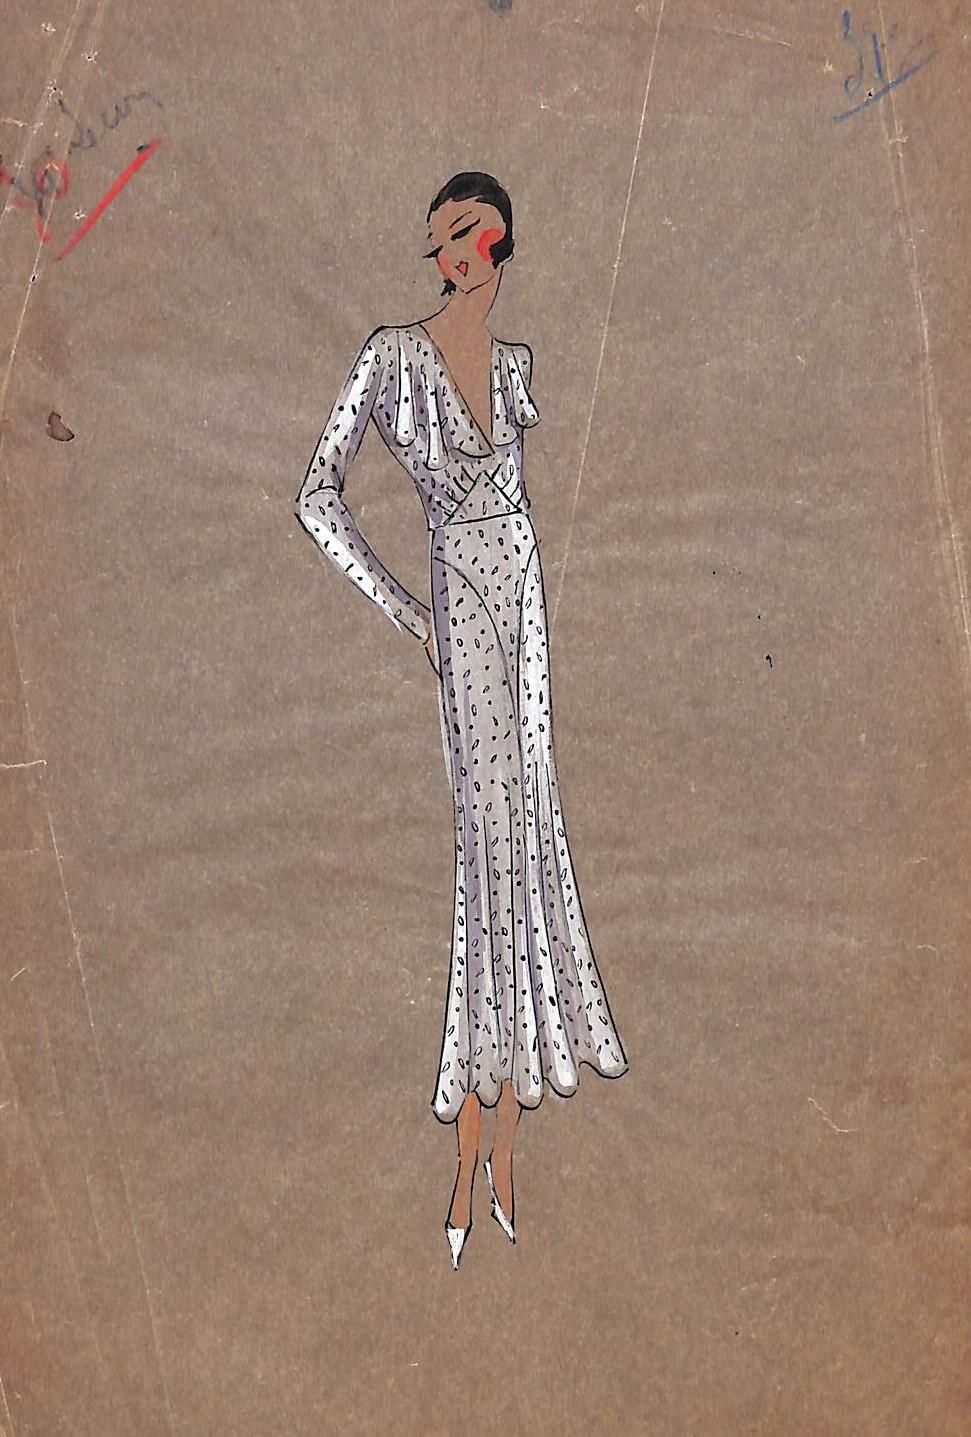 Parisian Women's c1920s Fashion Gouache - Art by Unknown